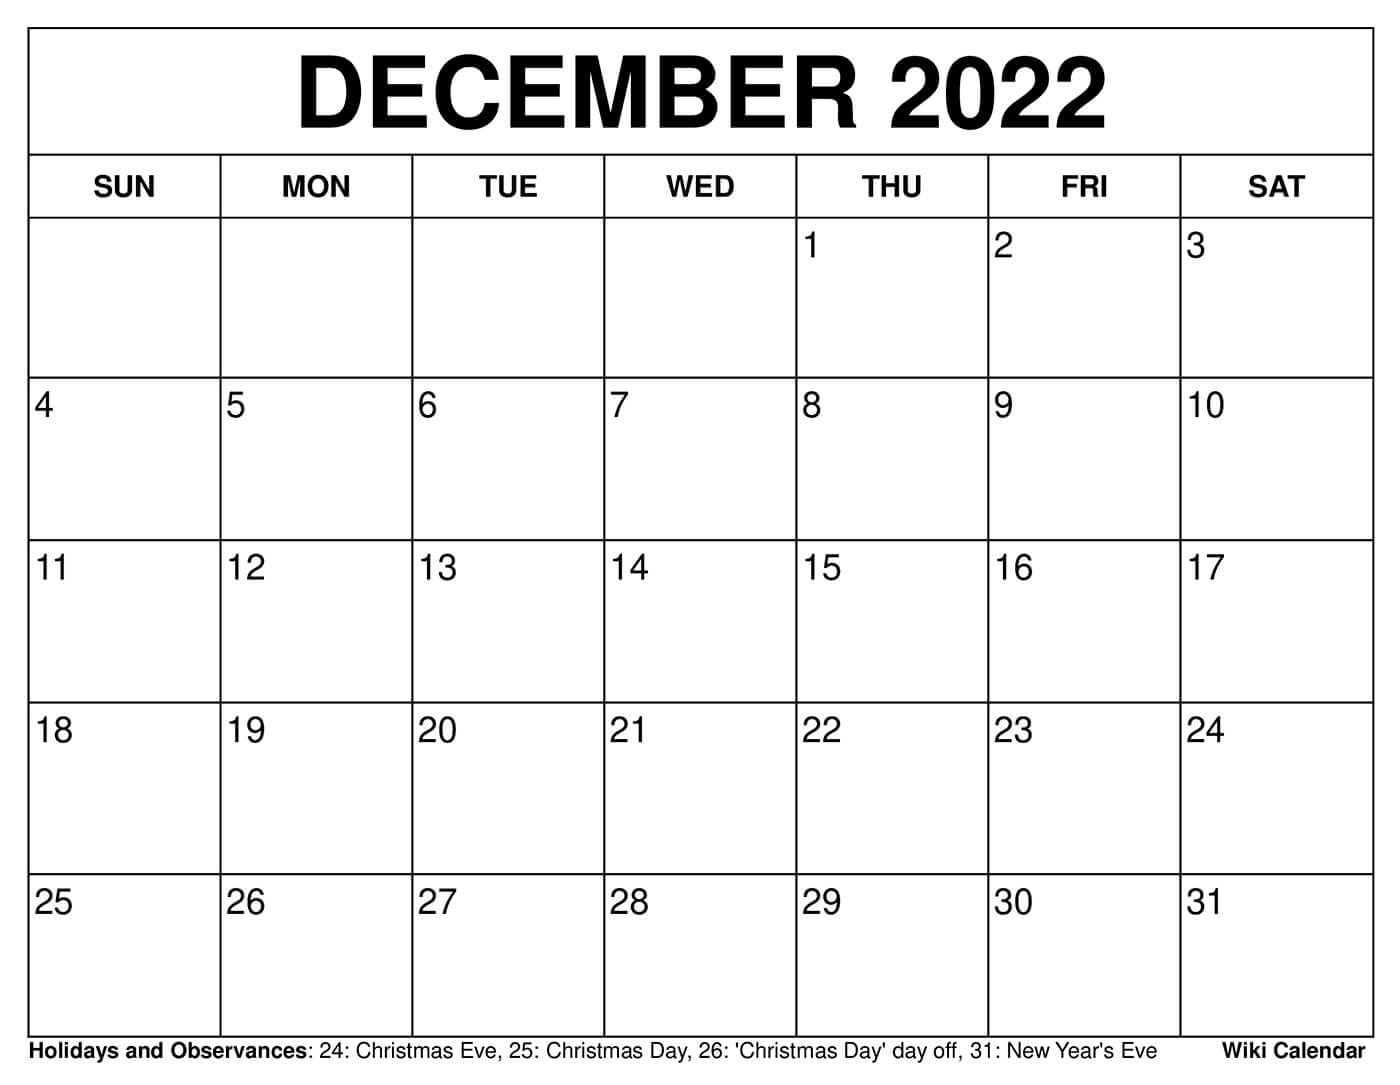 December Calendar For 2022 Free Printable December 2022 Calendars - Wiki Calendar